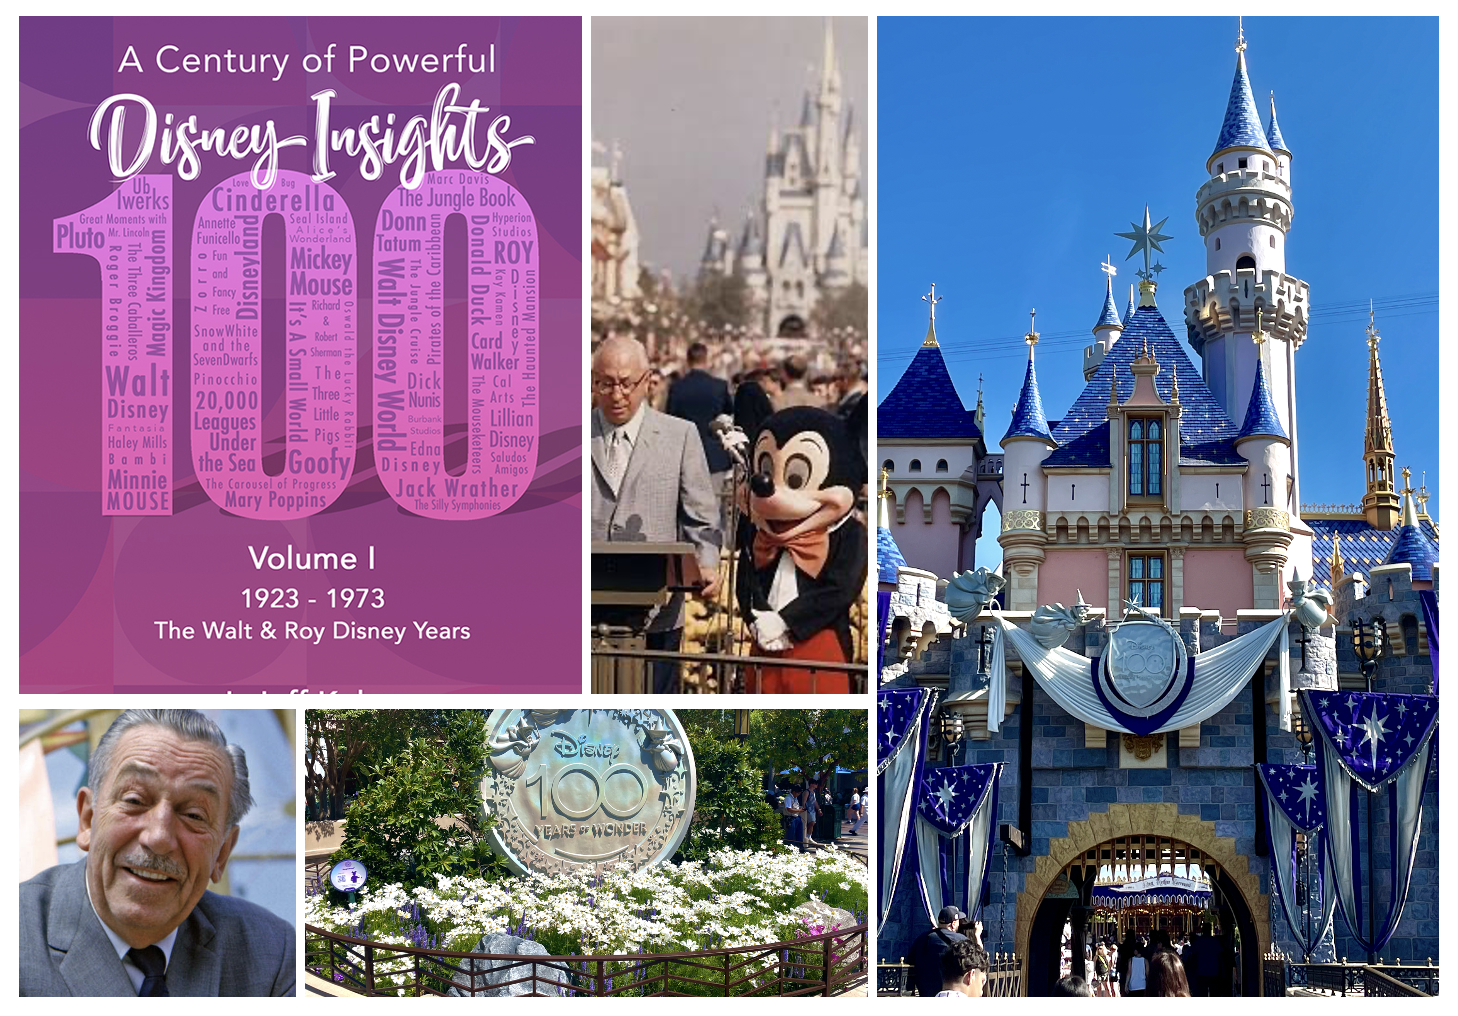 Celebrating A Century of Powerful Disney Insights